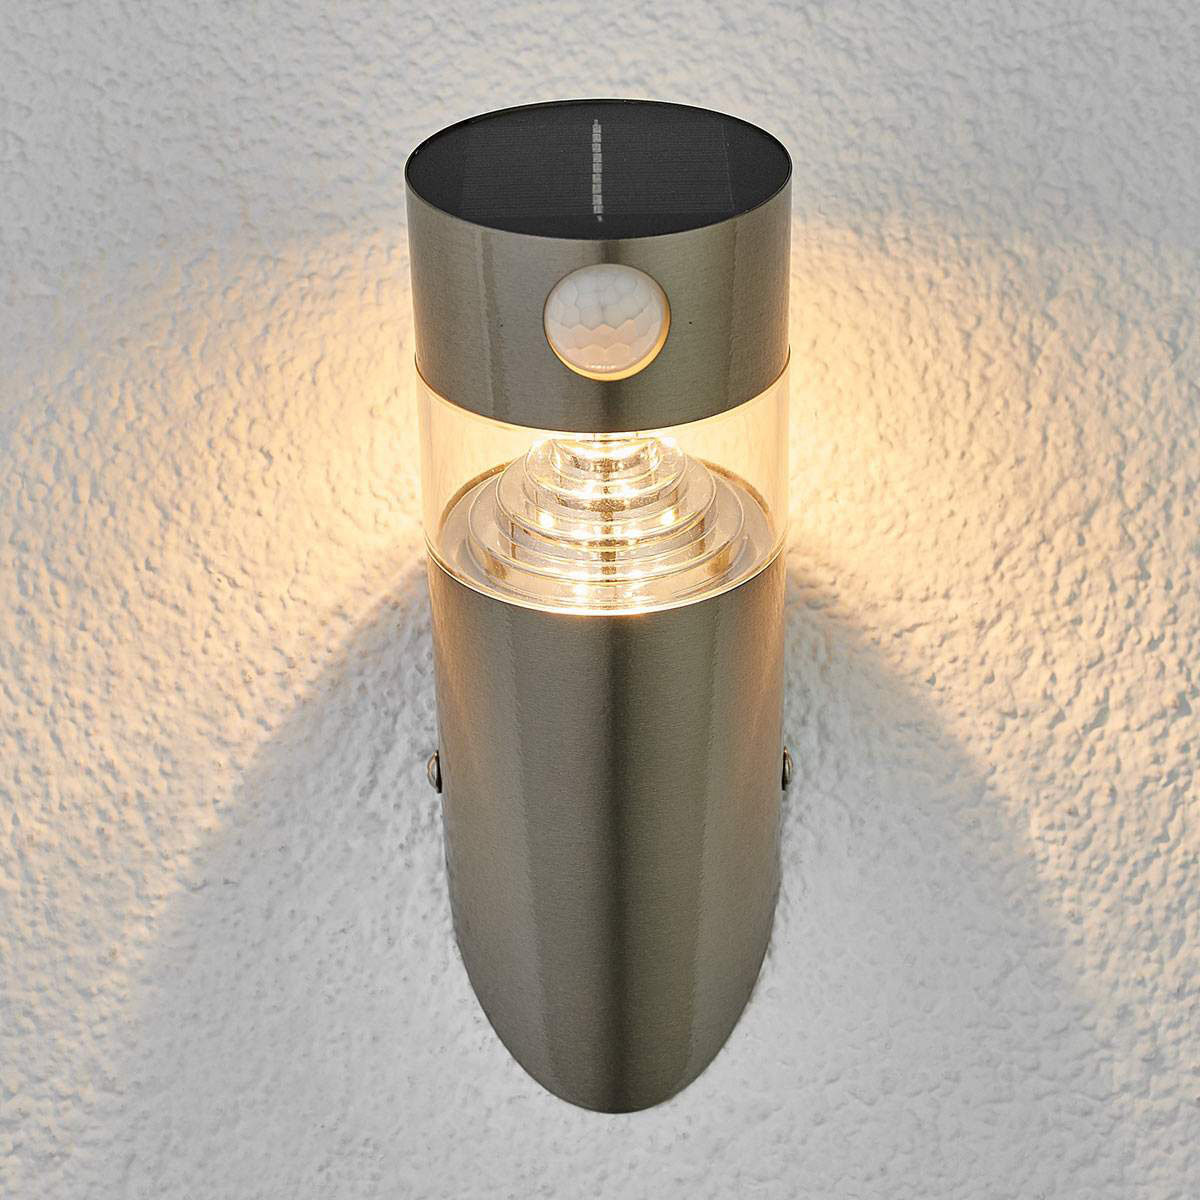 Solar-LED-Wandlampe Kalypso mit Bewegungsmelder, 21,3x7,6x7,6 cm, Edelstahl, silber
| #2